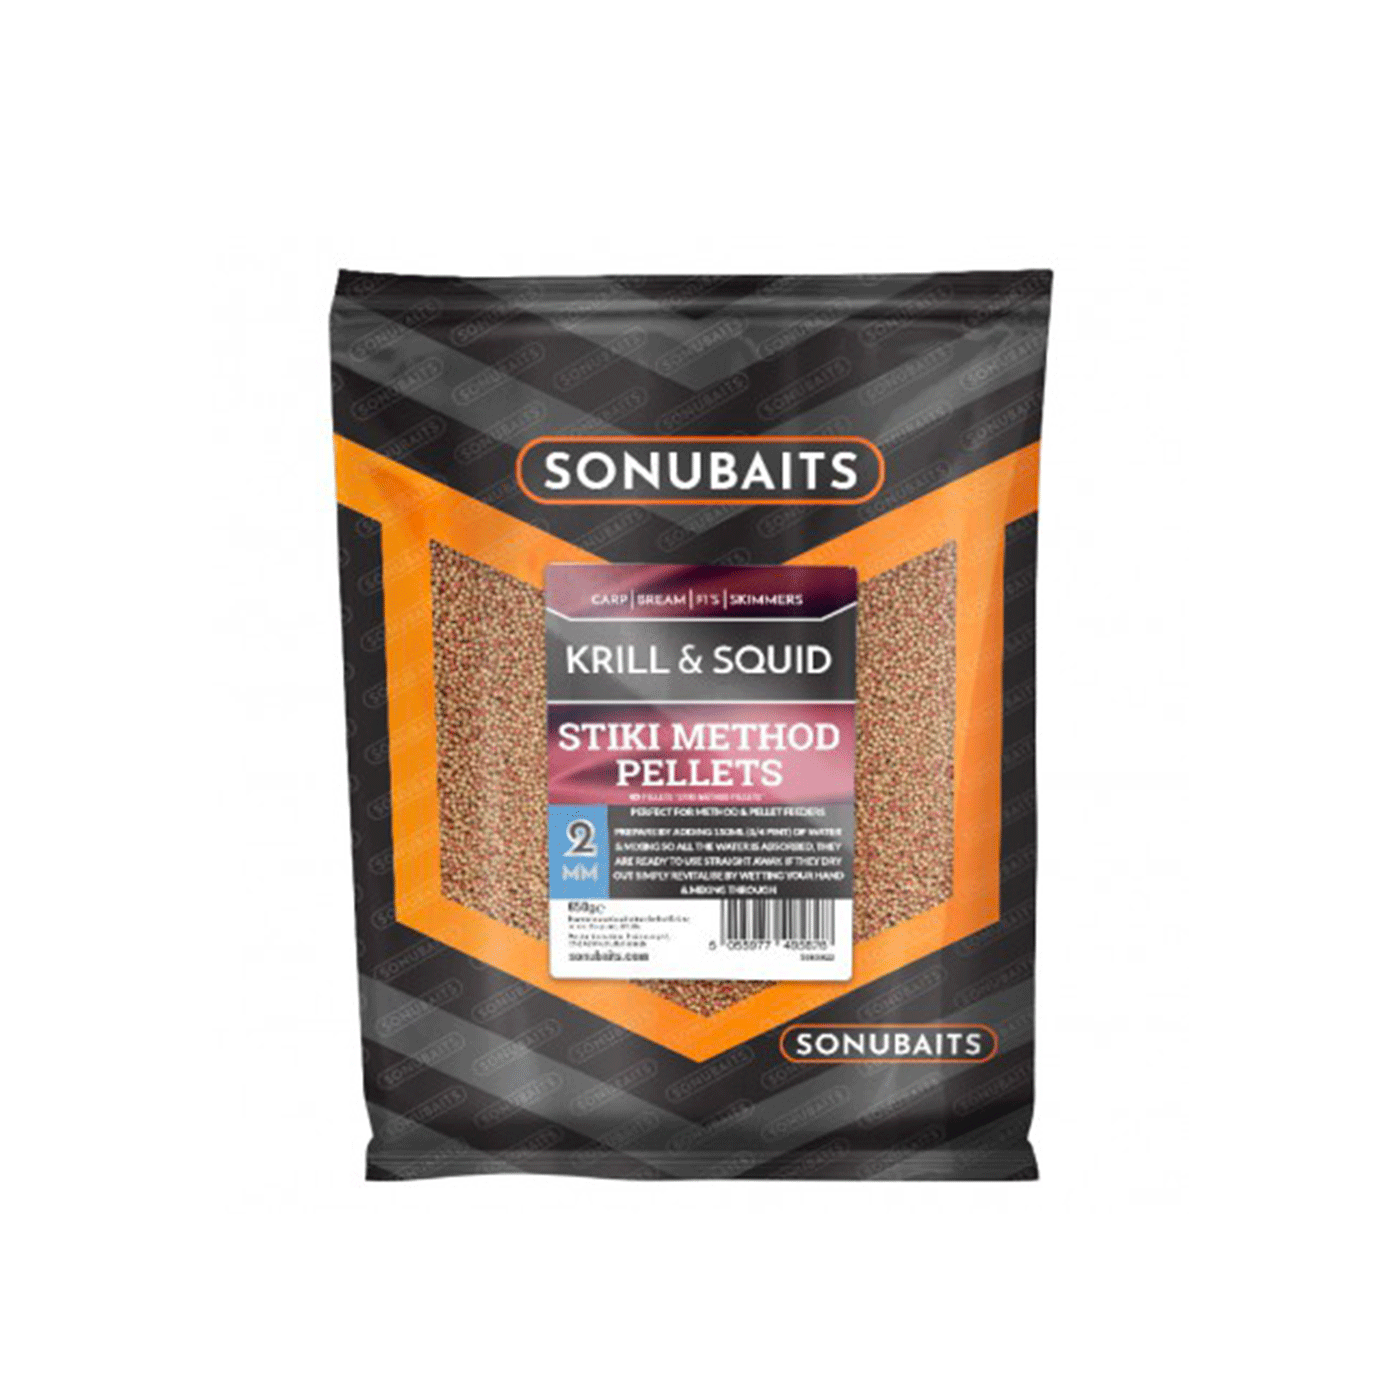 SONUBAITS - KRILL & SQUID STIKI METHOD PELLETS 2MM 650g